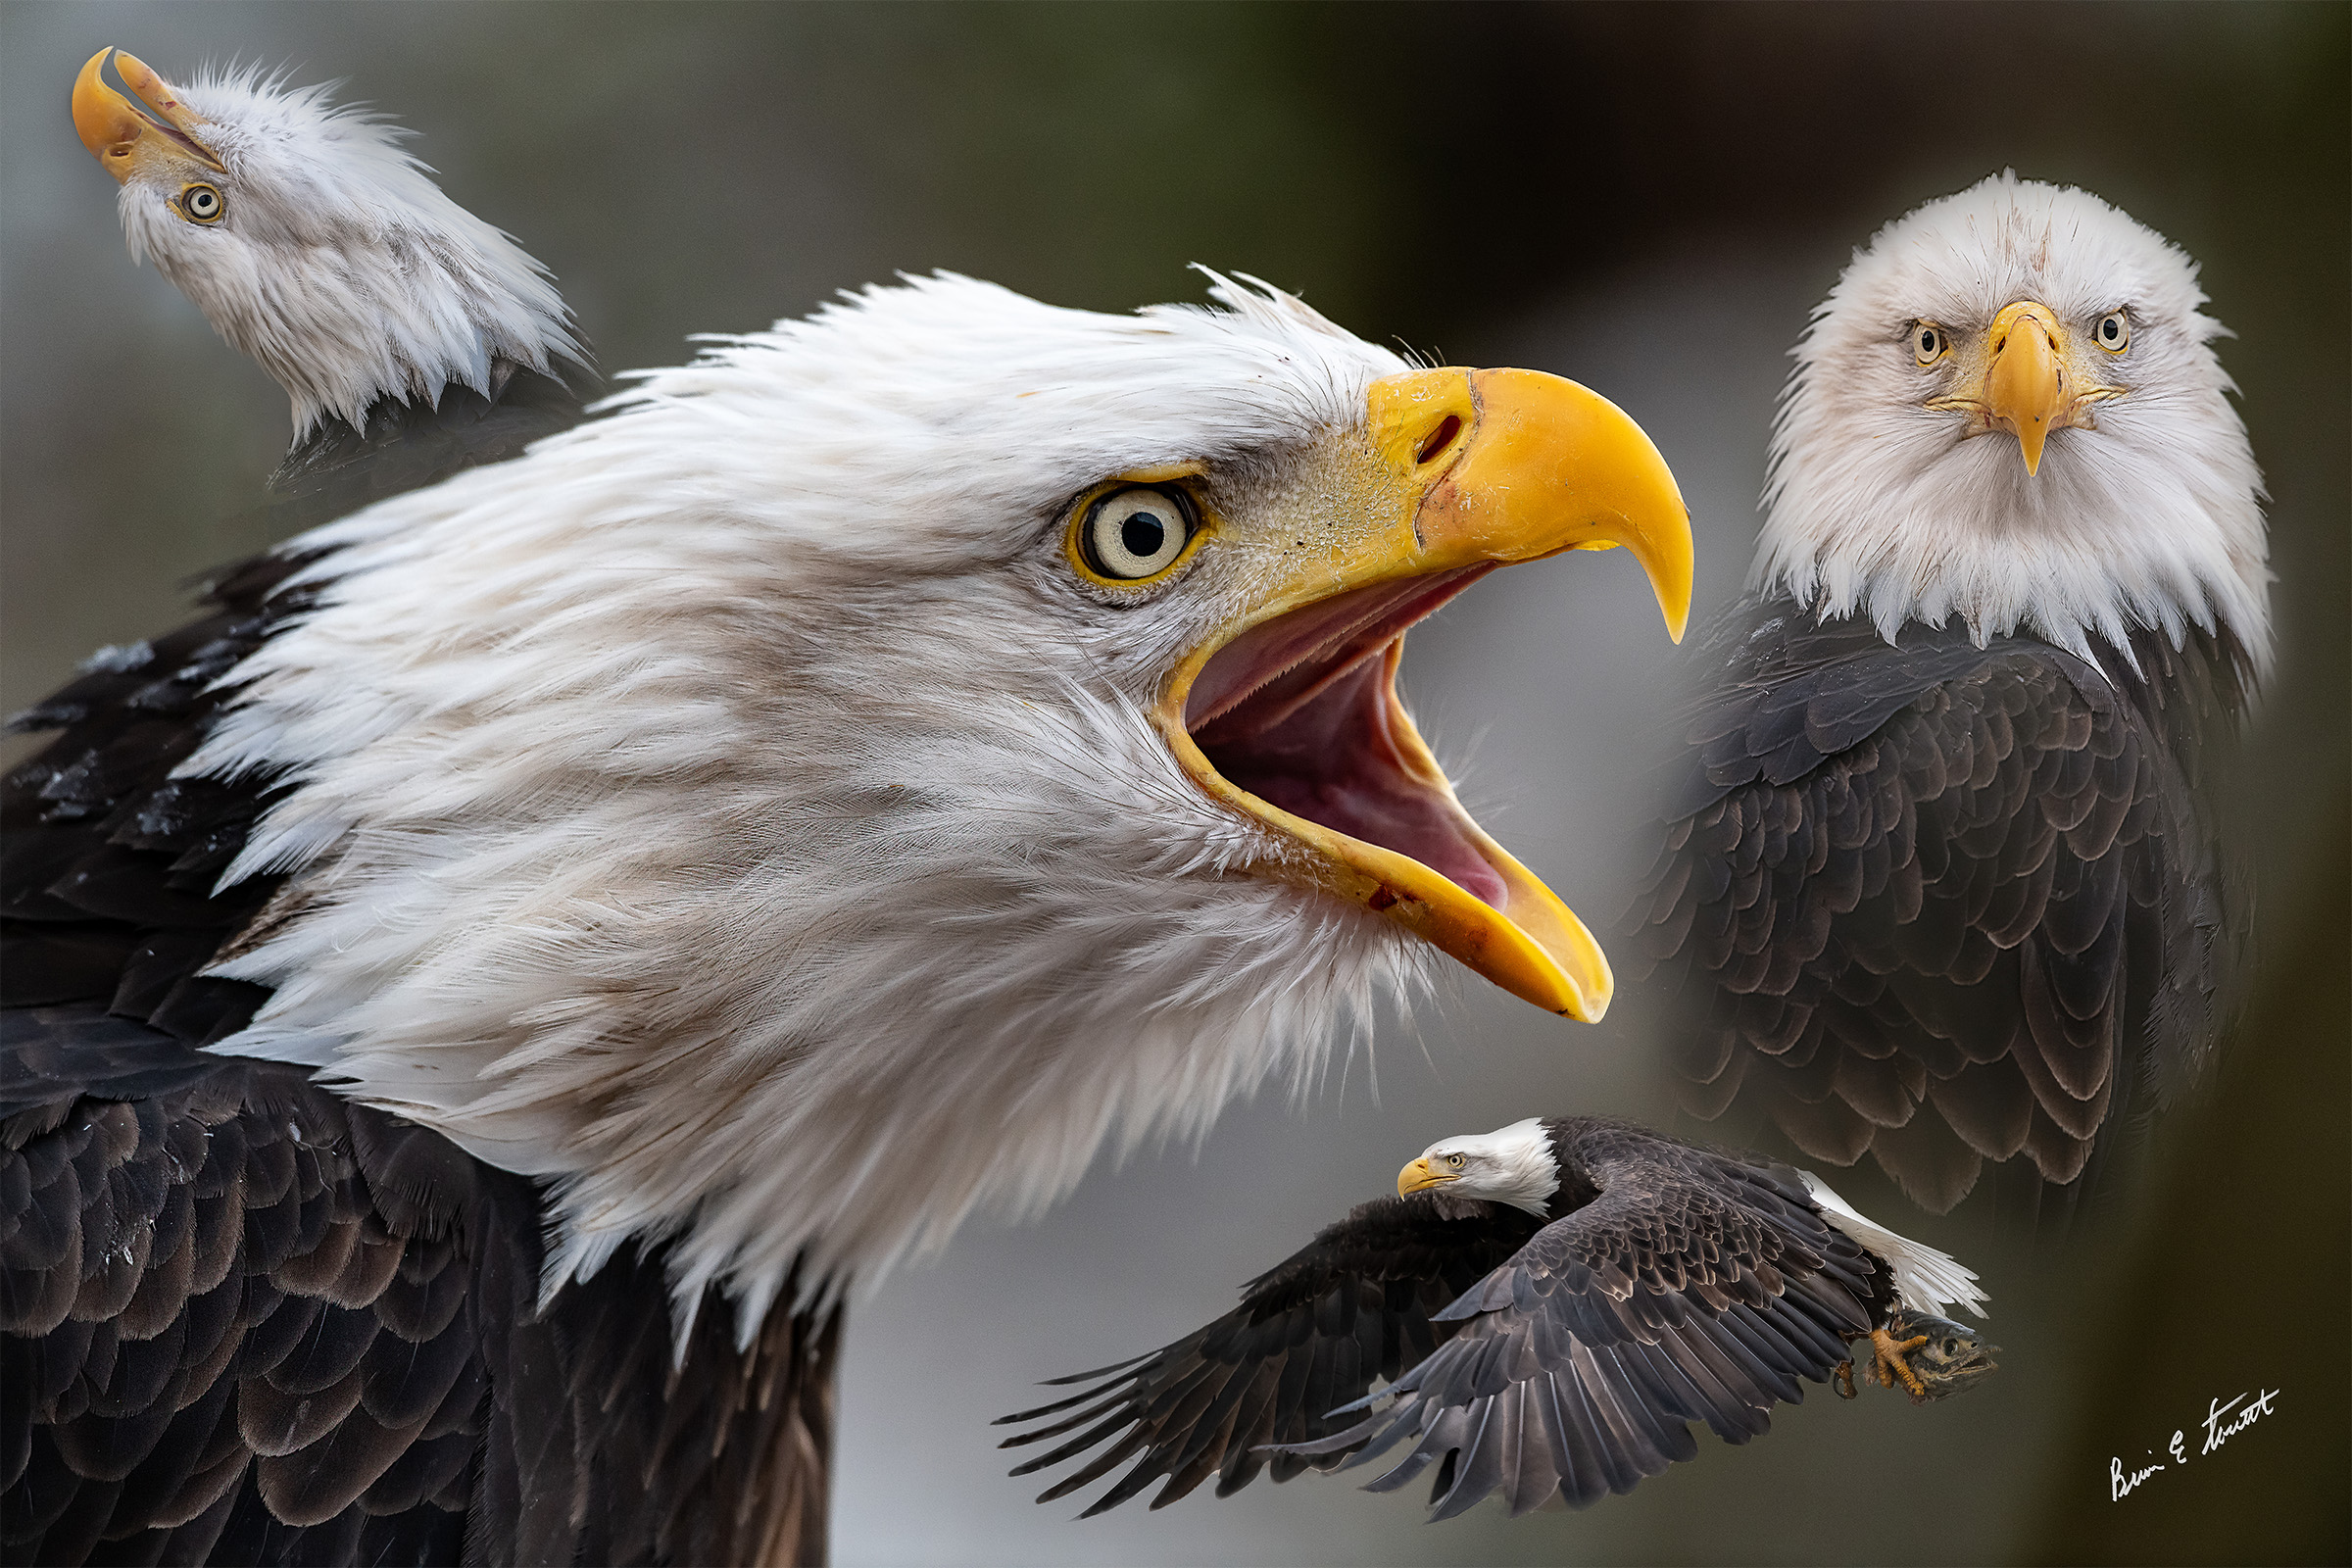 Alaska Pair of Eagles Photo Print